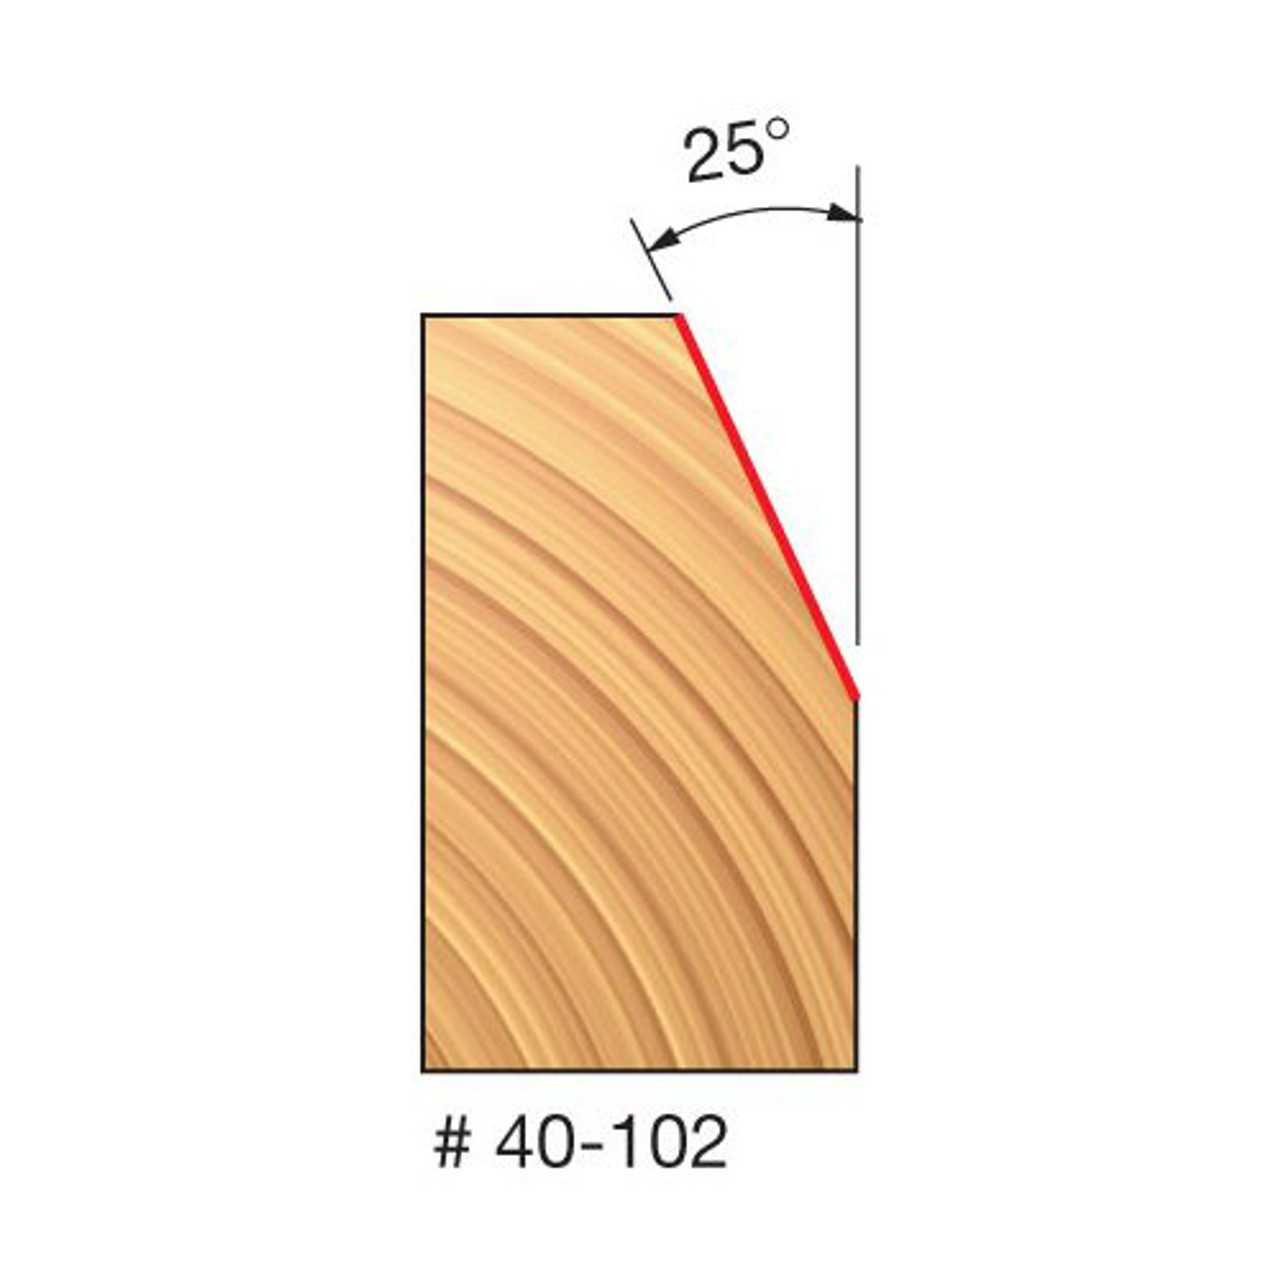 Freud Chamfer Bit, 25 Deg. Angle, 1/4" Carbide Height, 15/16" Overall Diameter, 1/4" Shank, 1/2" Bearing Diameter,